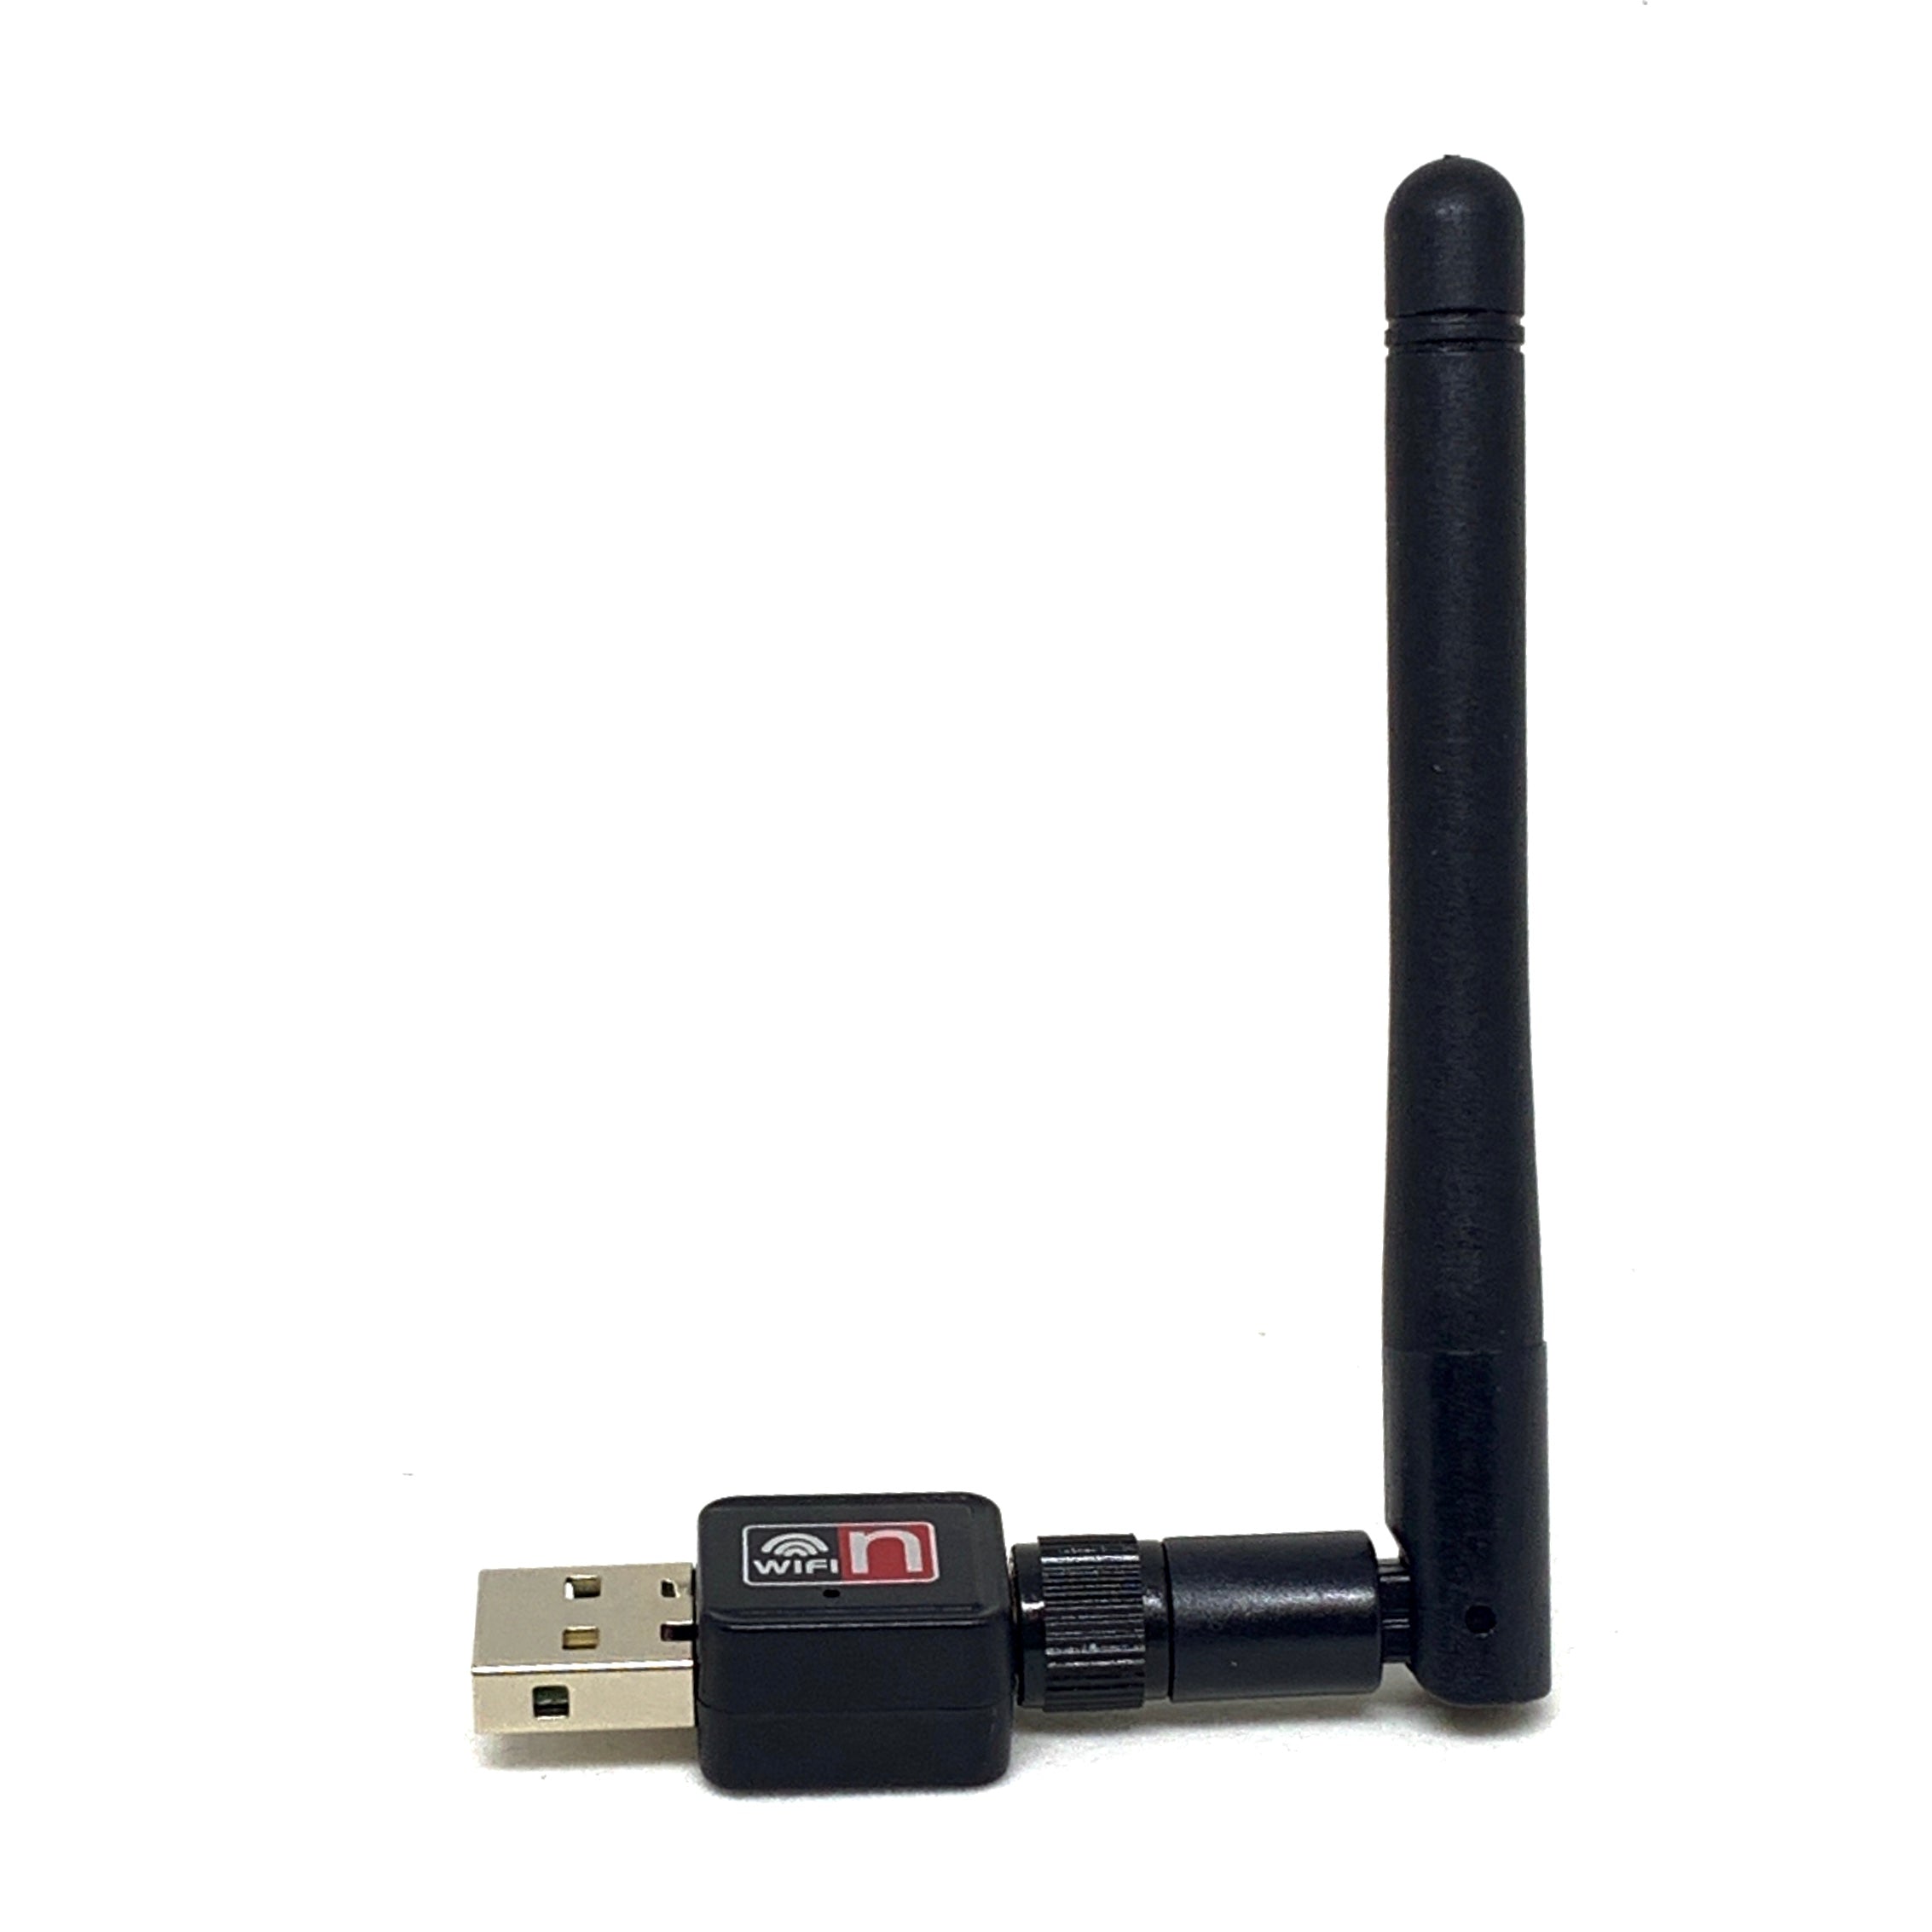 ANTENA WIFI USB - ER.Services